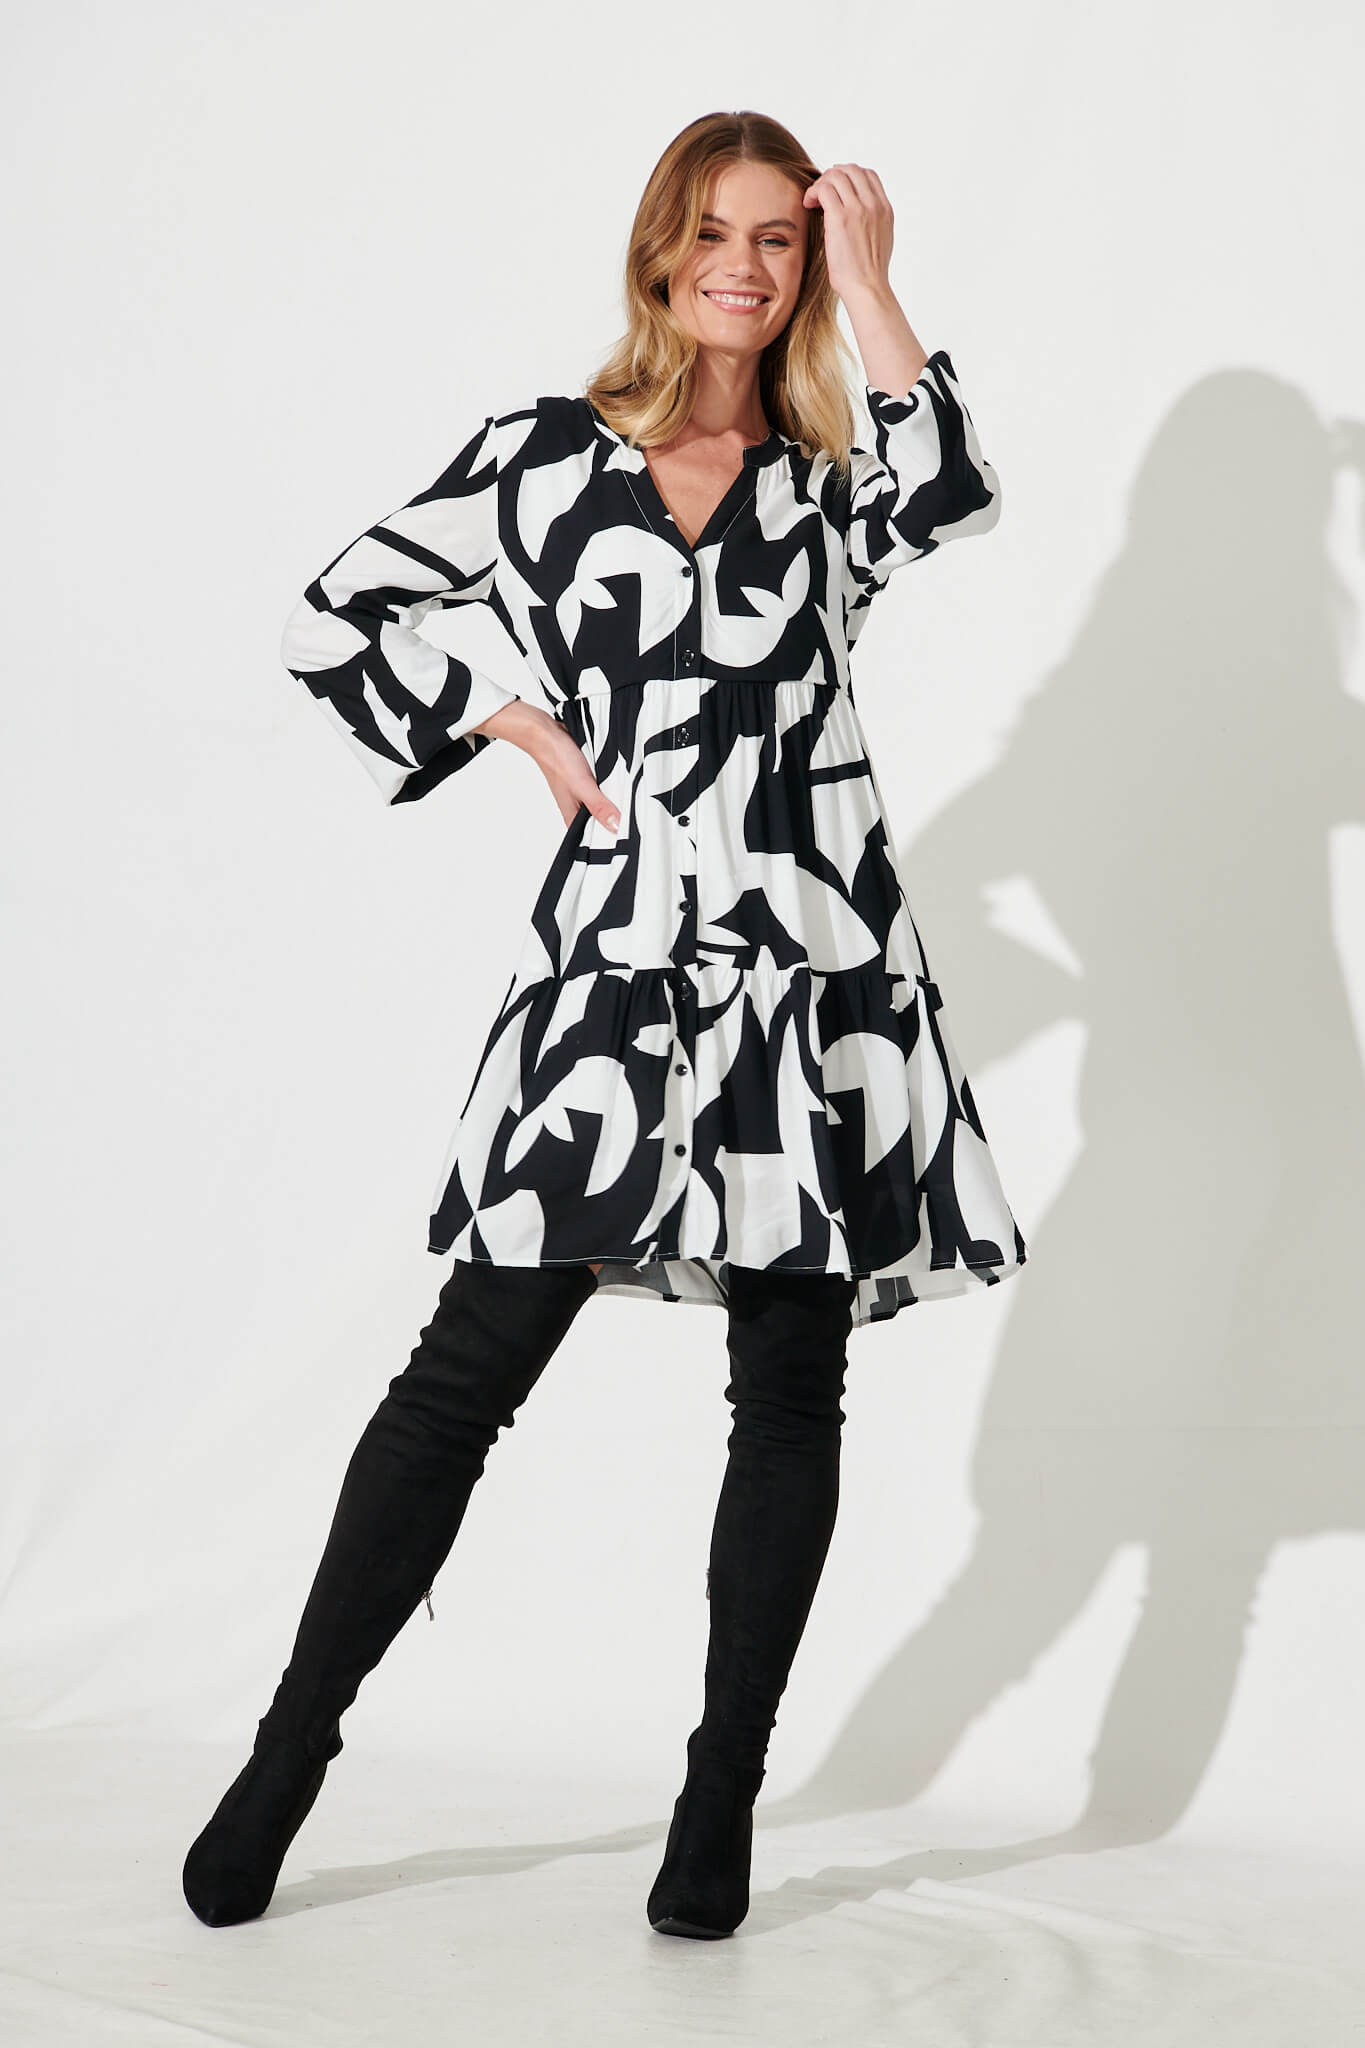 Cozumel Smock Dress In Black And Cream Geometric Print - full length